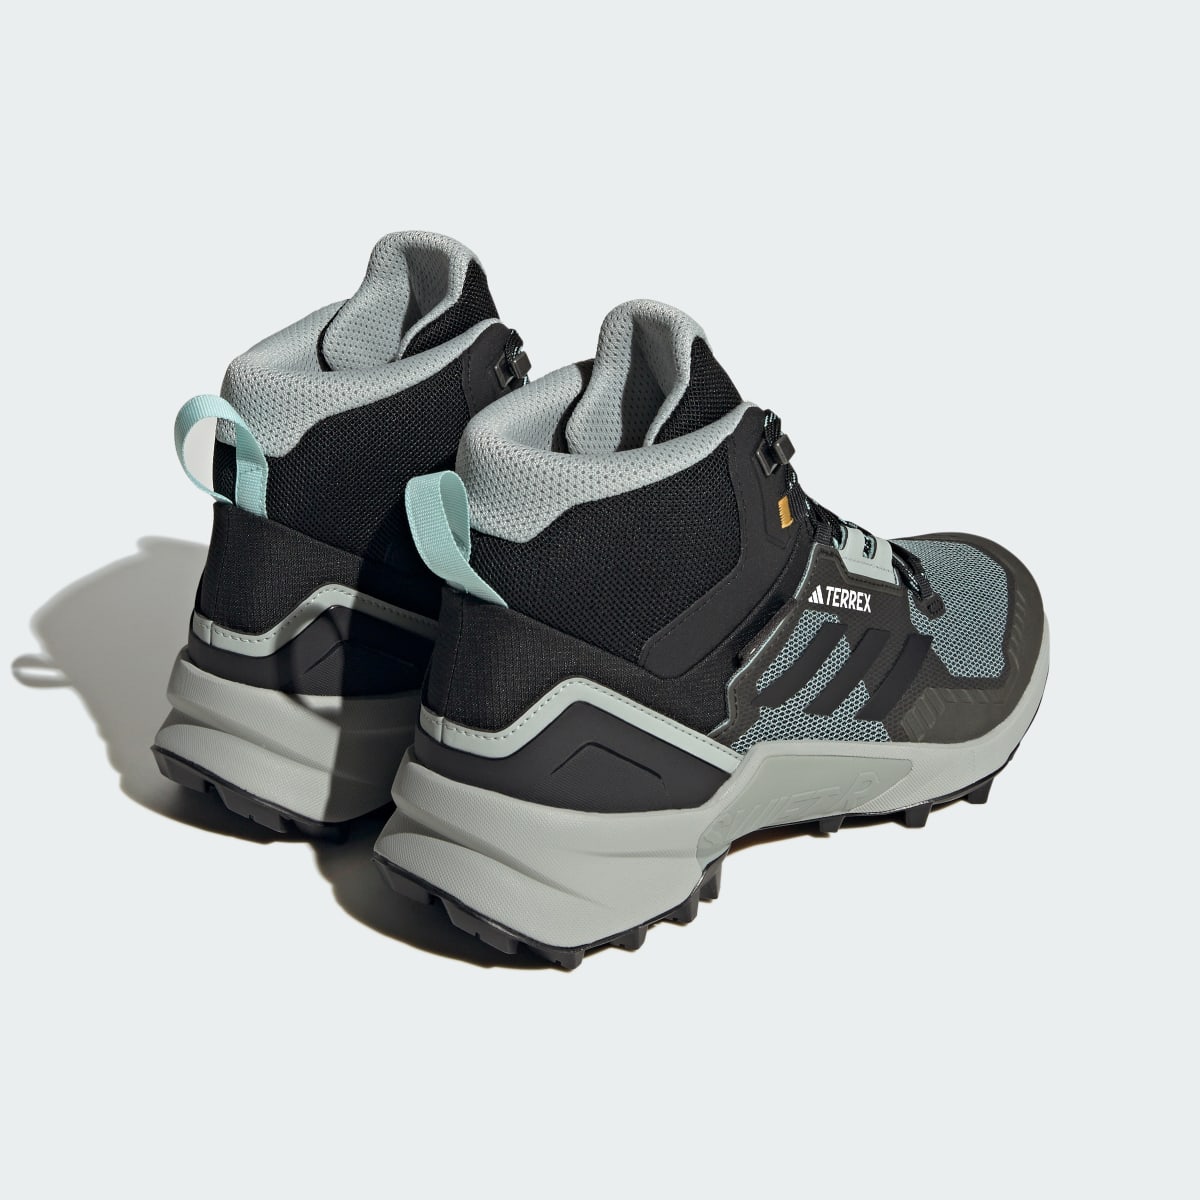 Adidas Terrex Swift R3 Mid GORE-TEX Hiking Shoes. 10